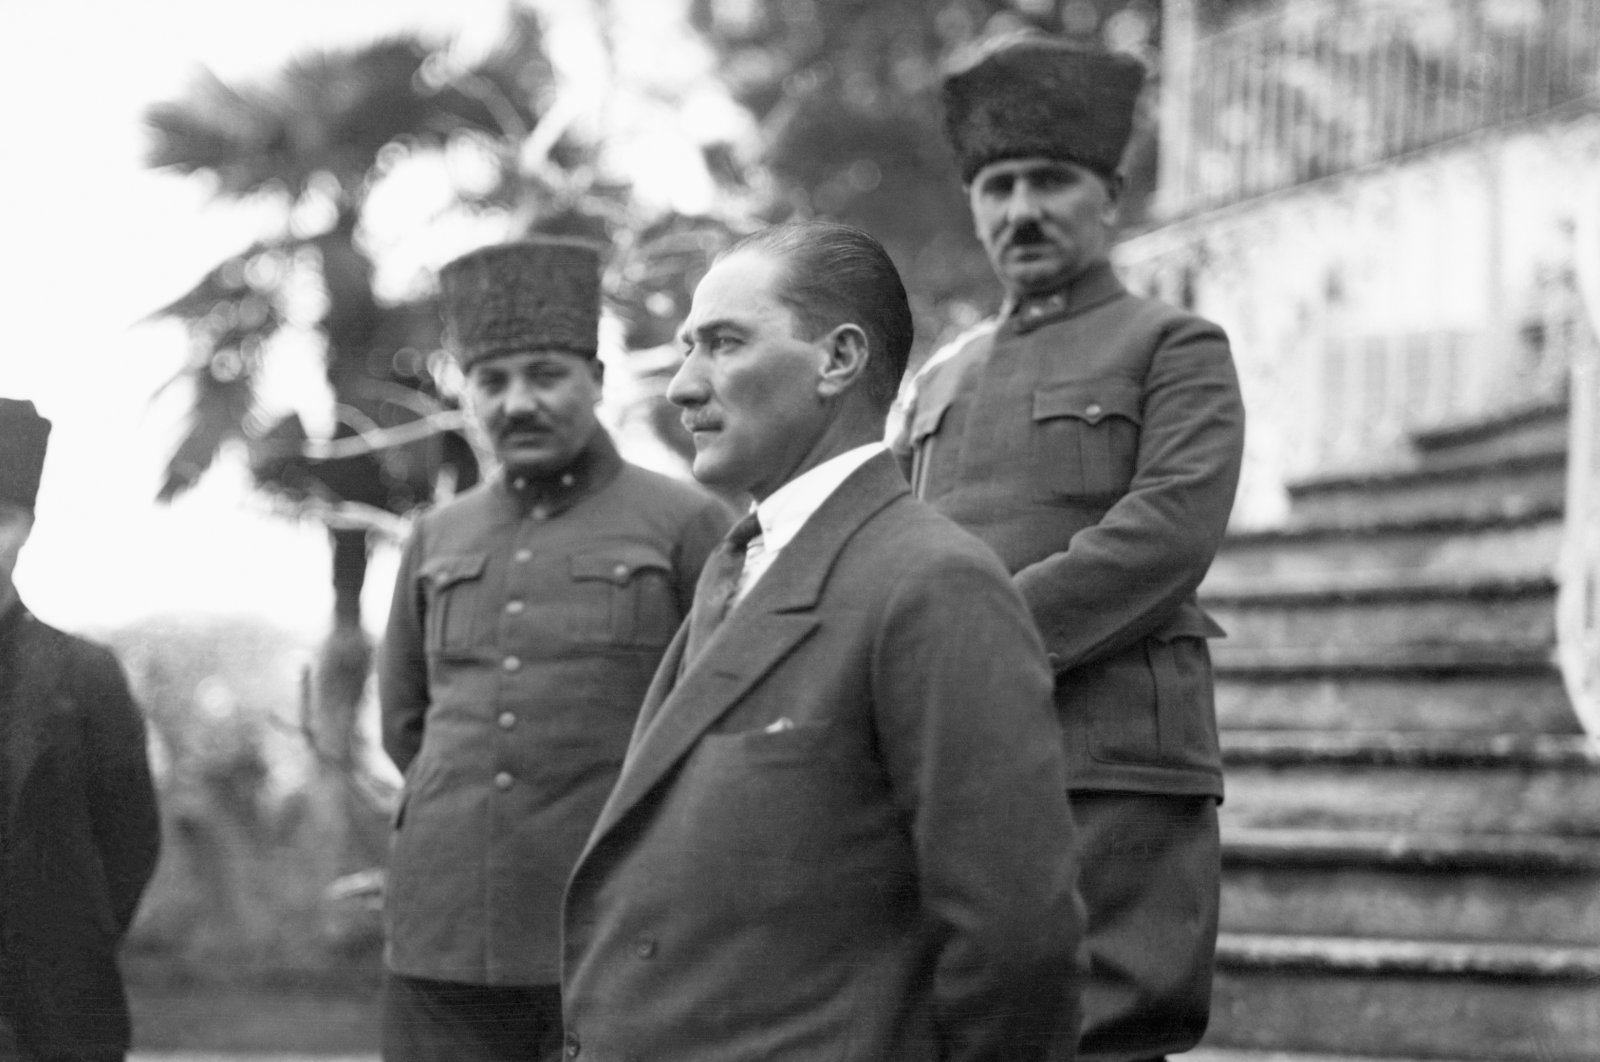 Mustafa Kemal Atatürk founder of the Republic of Türkiye, with army officers, June 3, 1923. (Getty Images Photo)